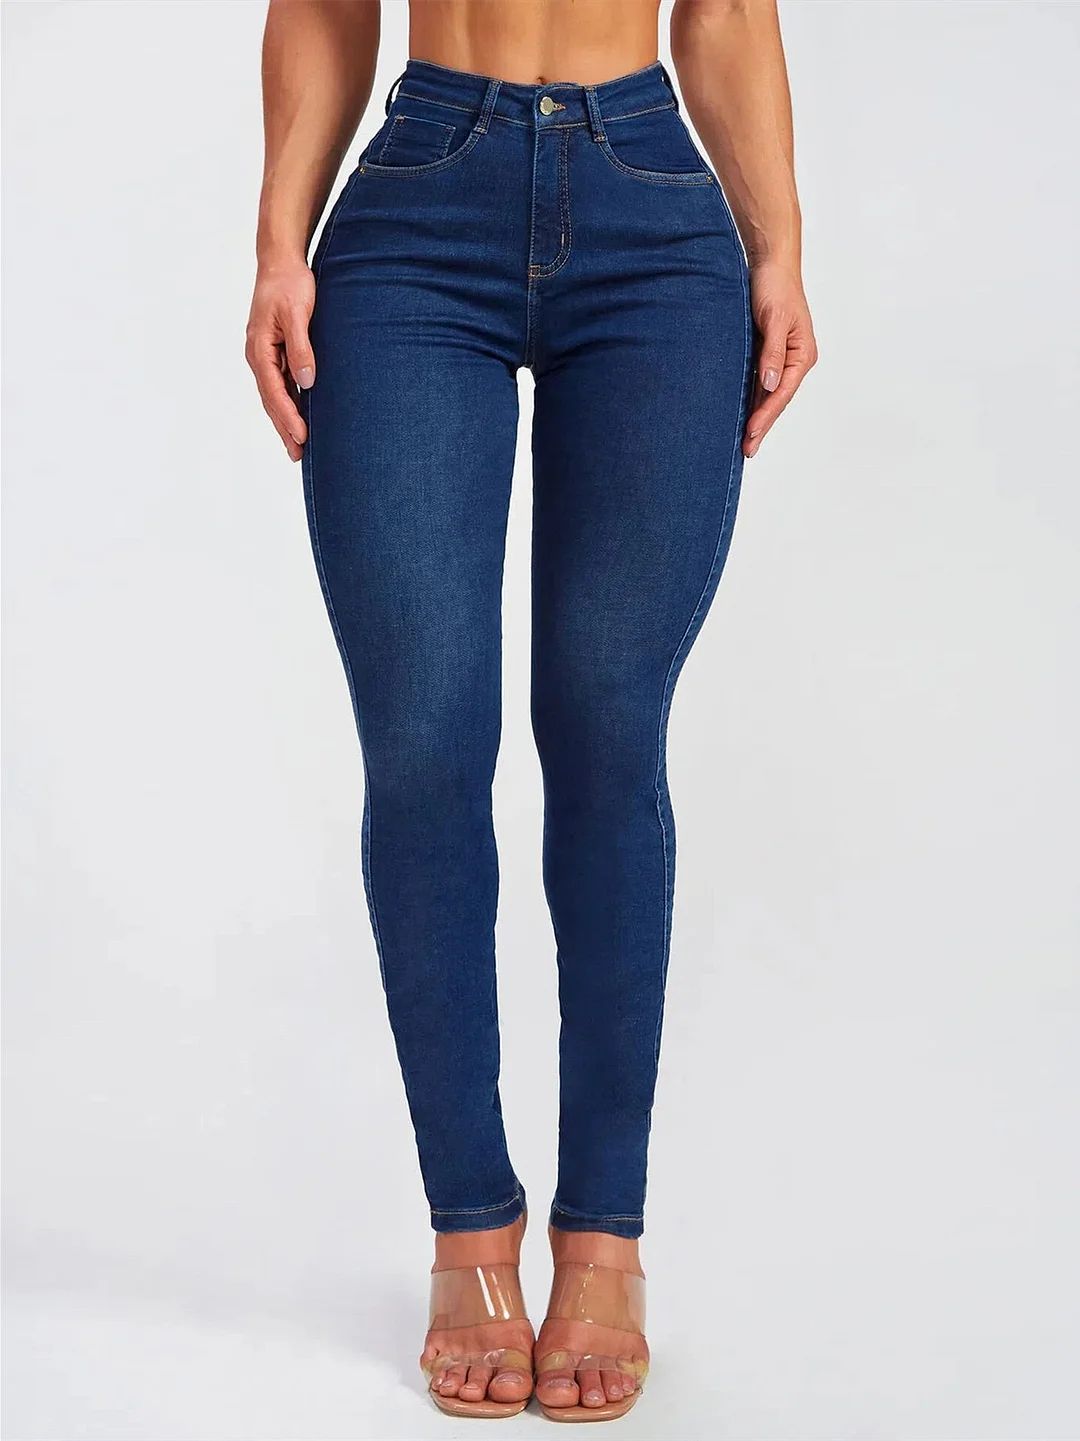 Women's Slim Fit Pencil Stretch High Waist Jeans Pants